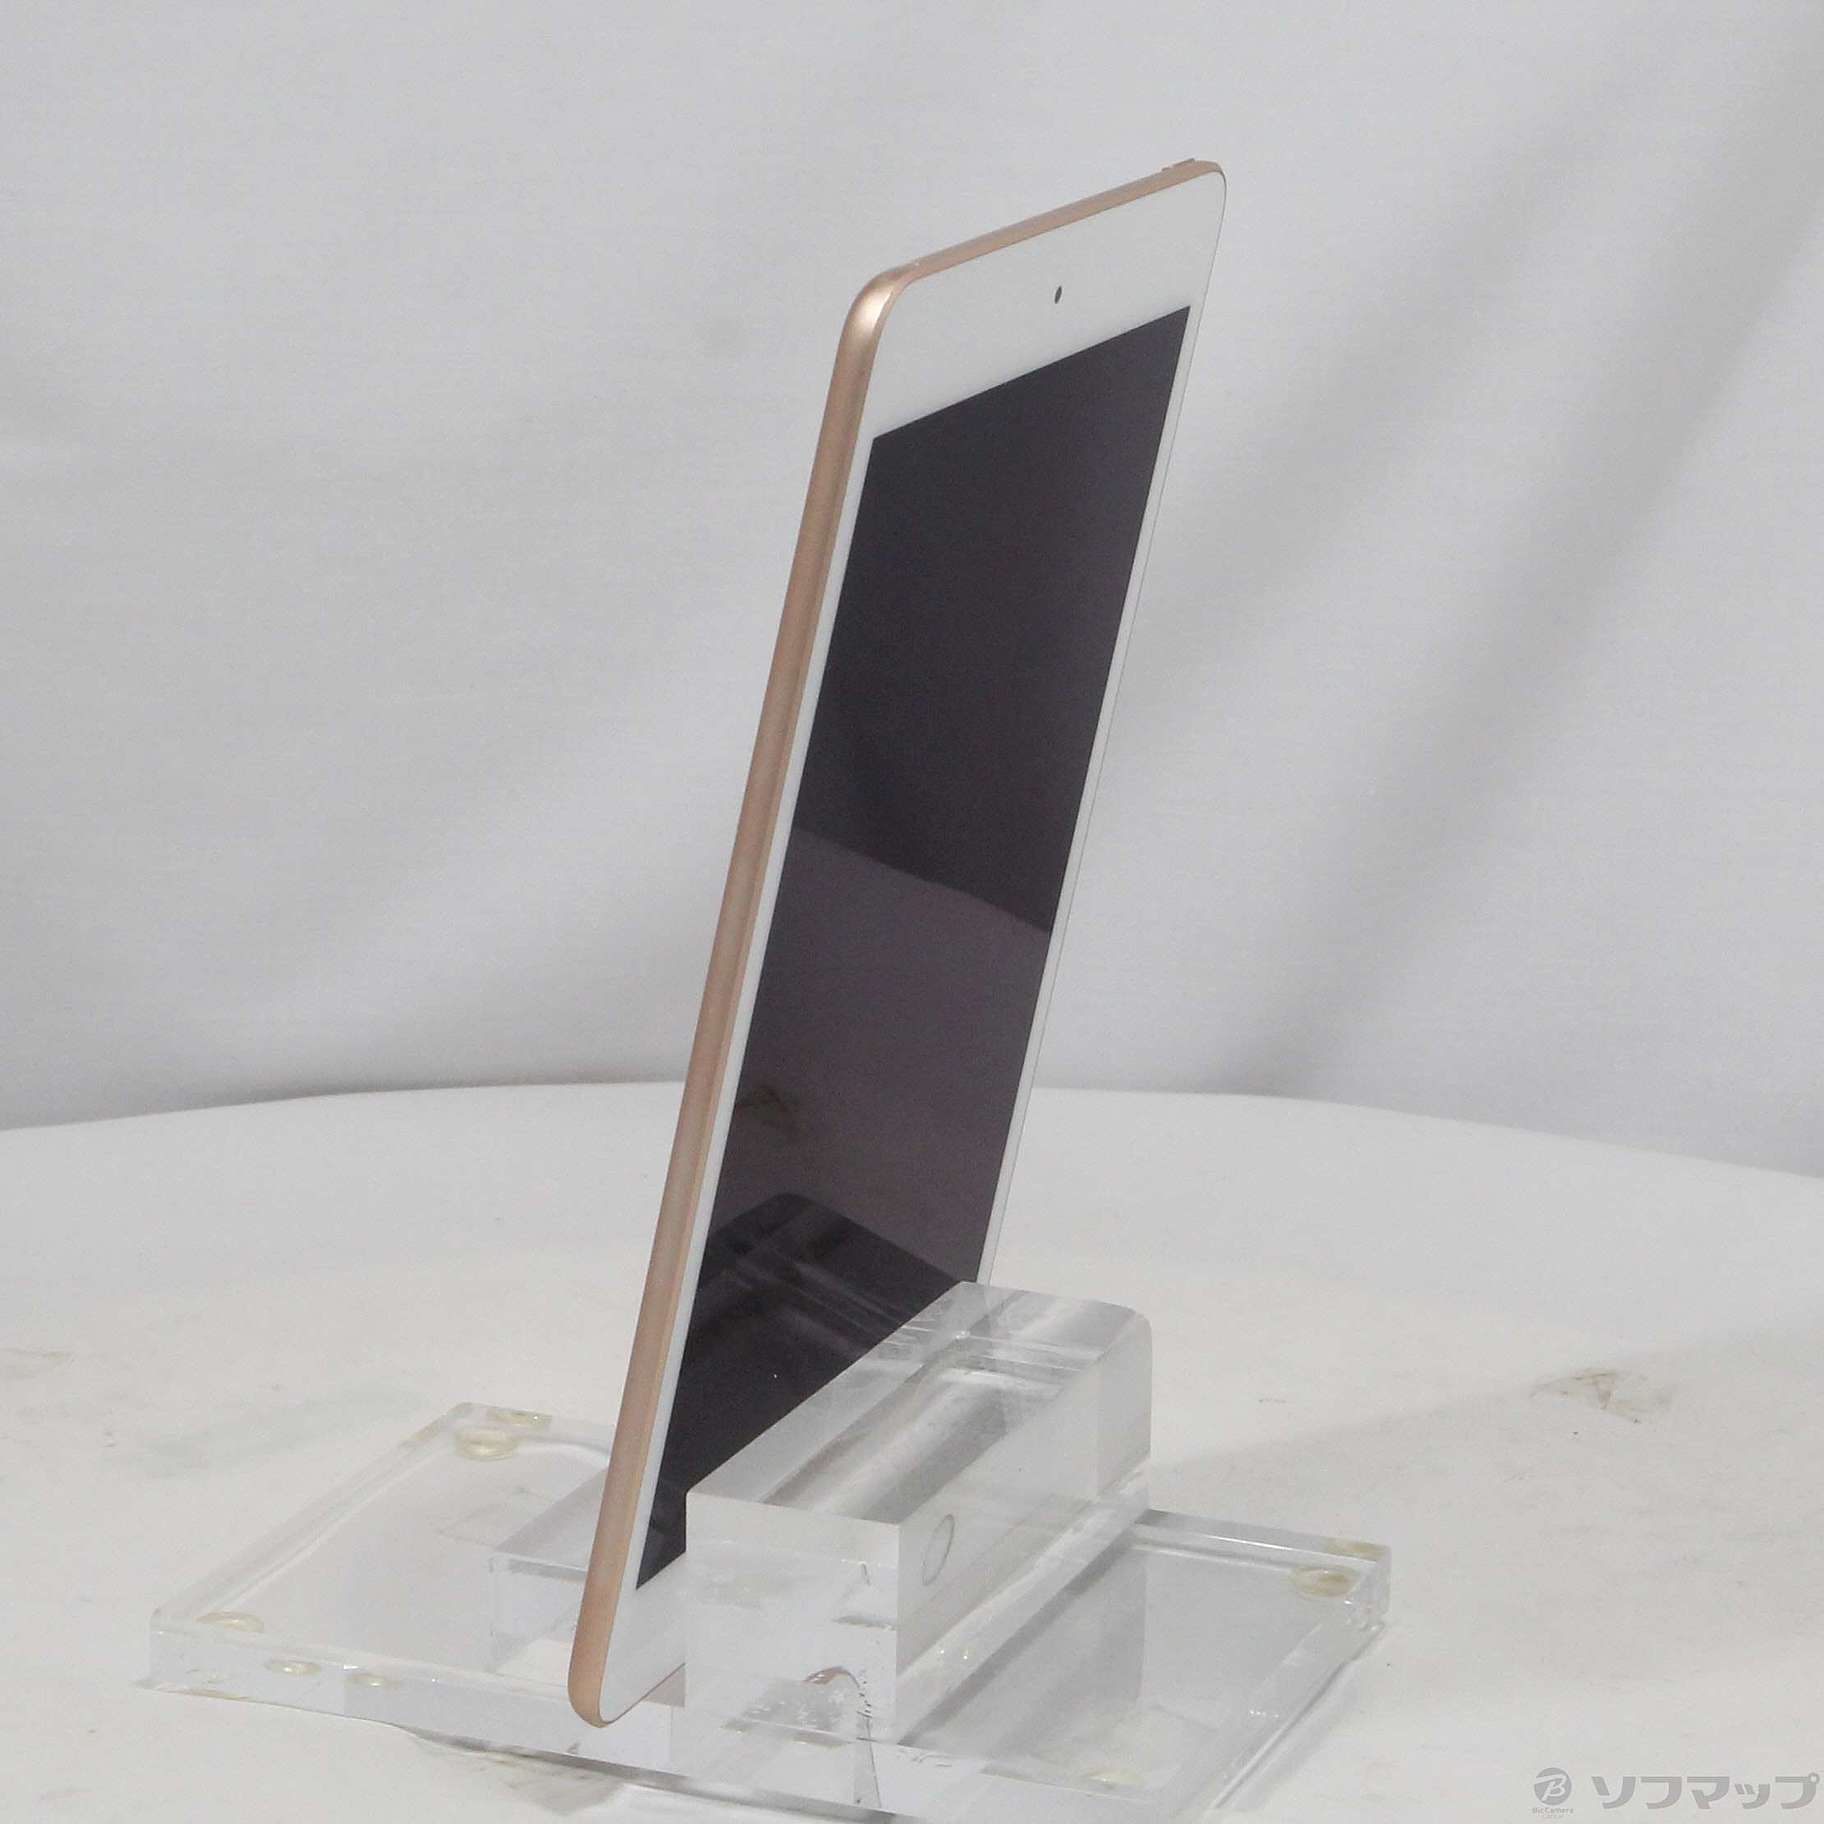 iPad mini 第5世代 64GB ゴールド MUQY2J／A Wi-Fi